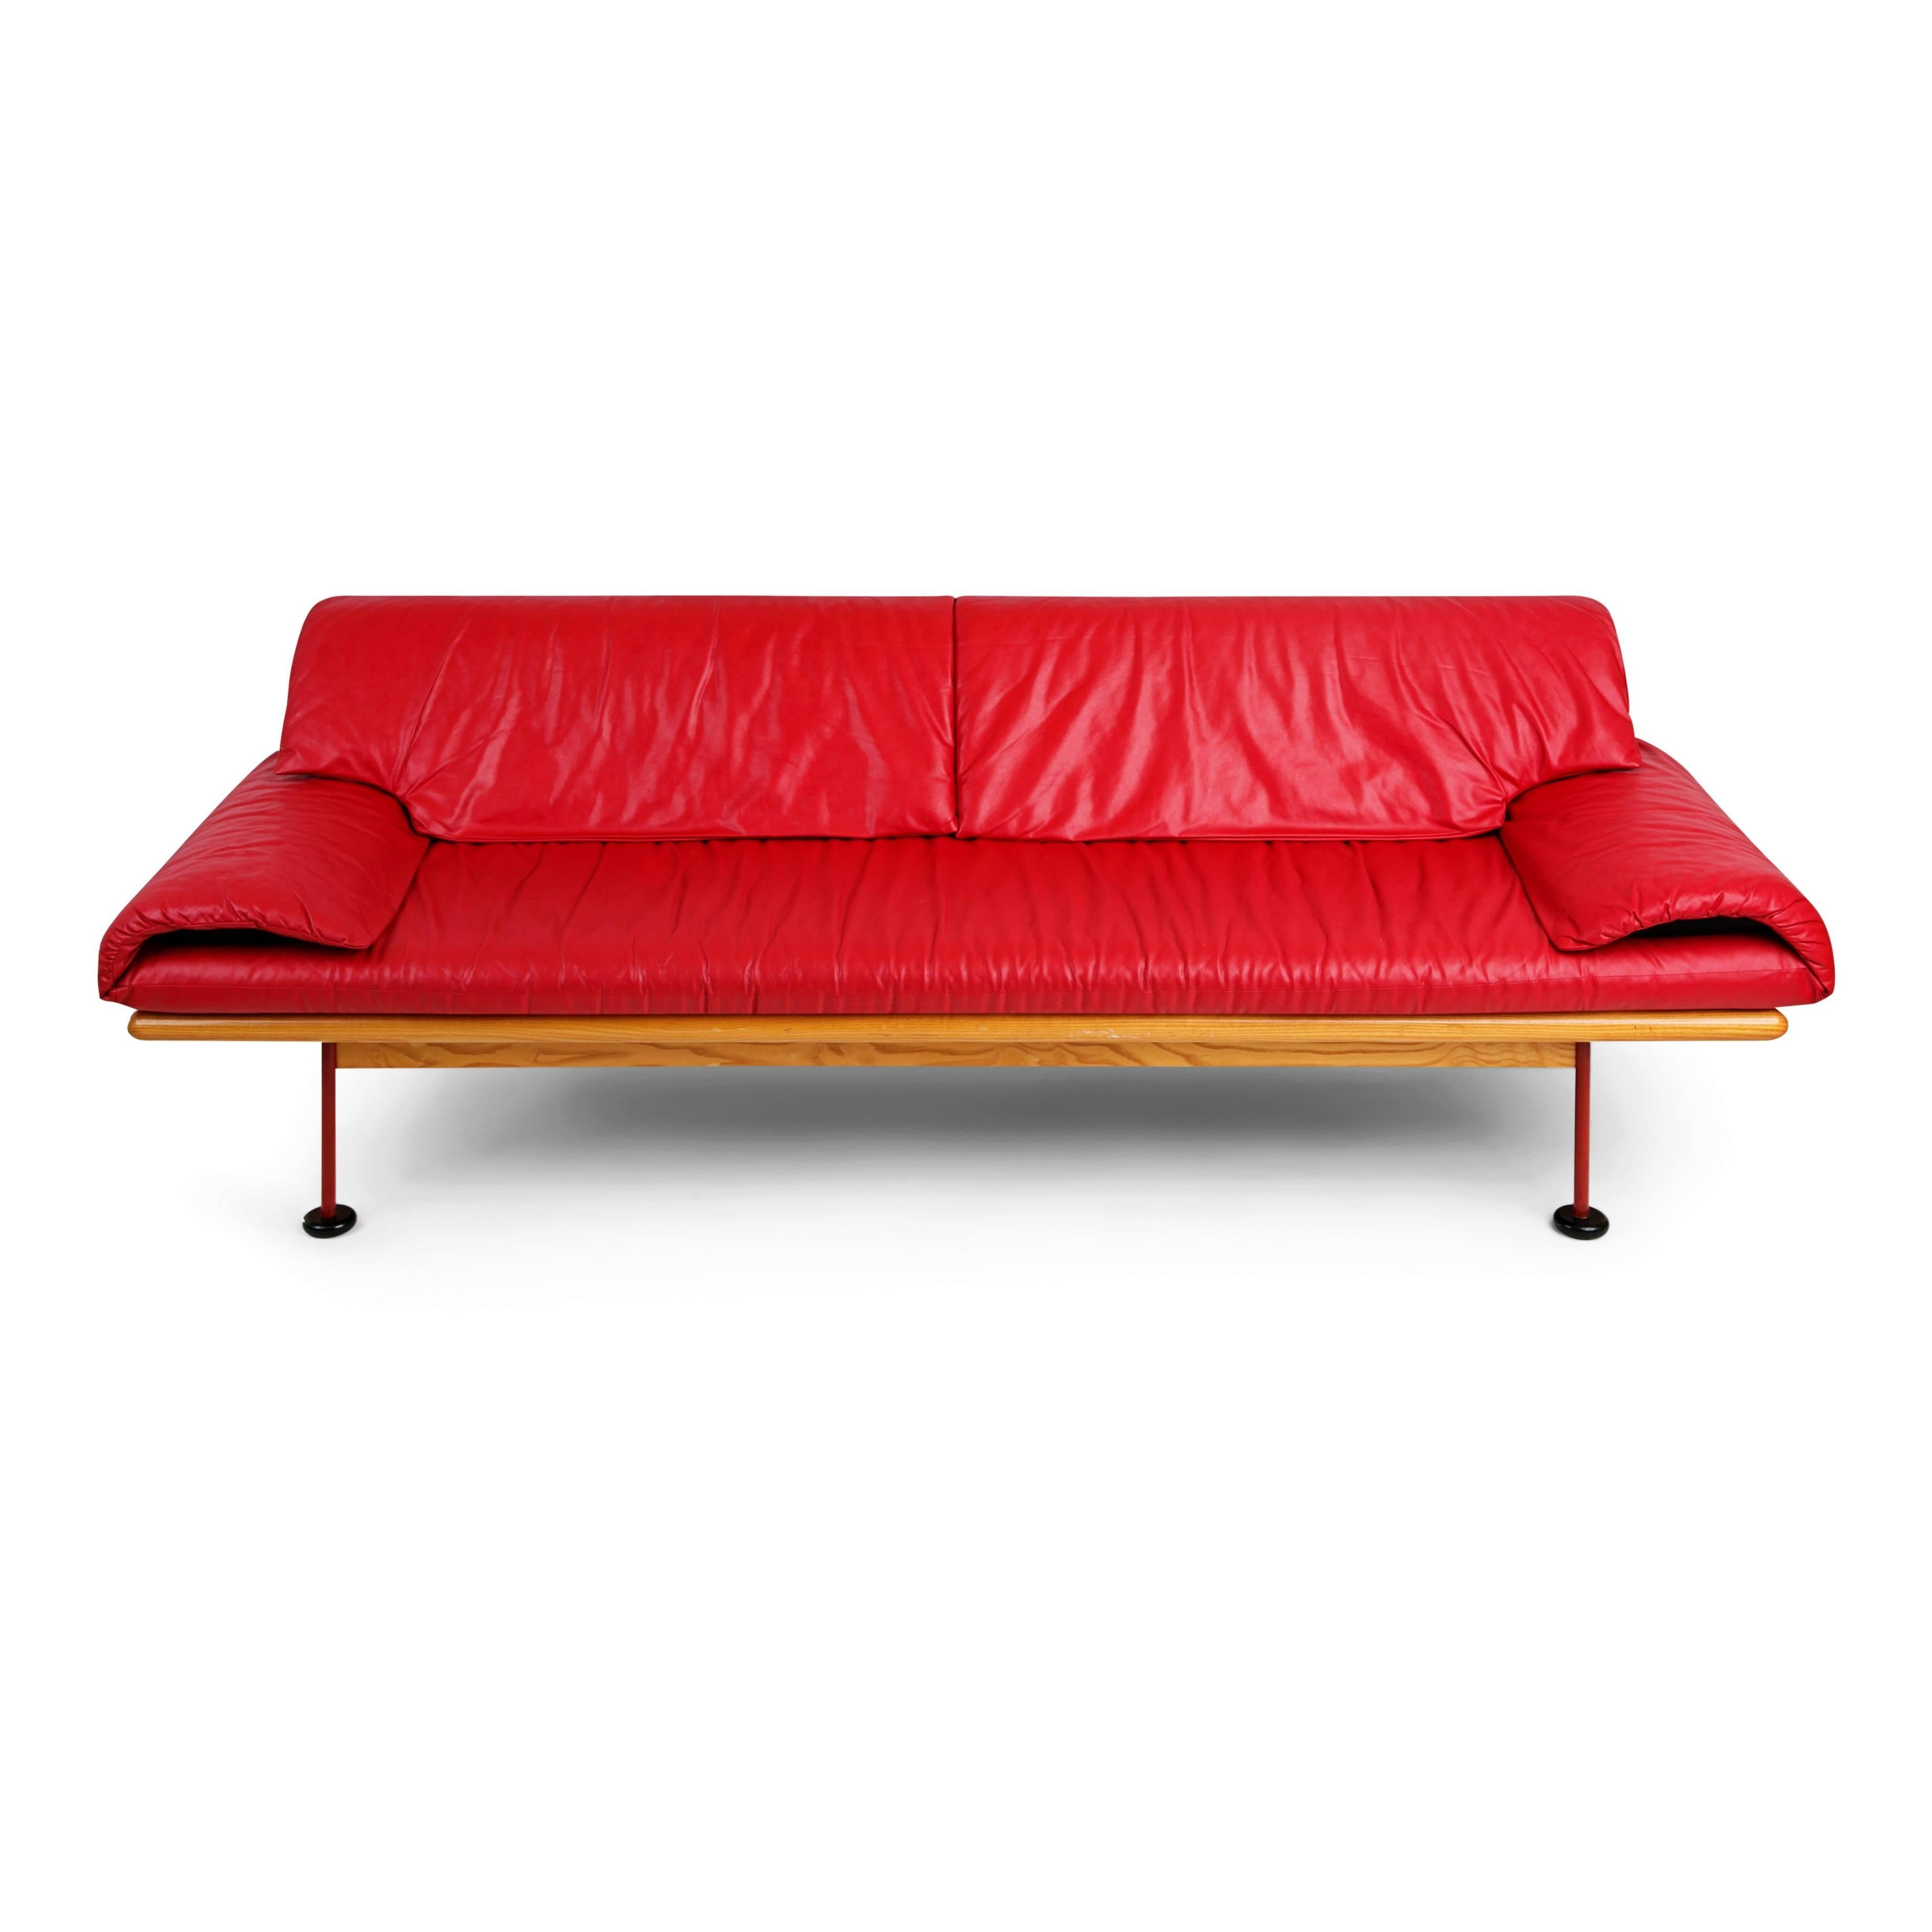 Sleekly designed postmodern sofa by Burkhard Vogtherr for Brayton International manufactured in 1984 as part of their 